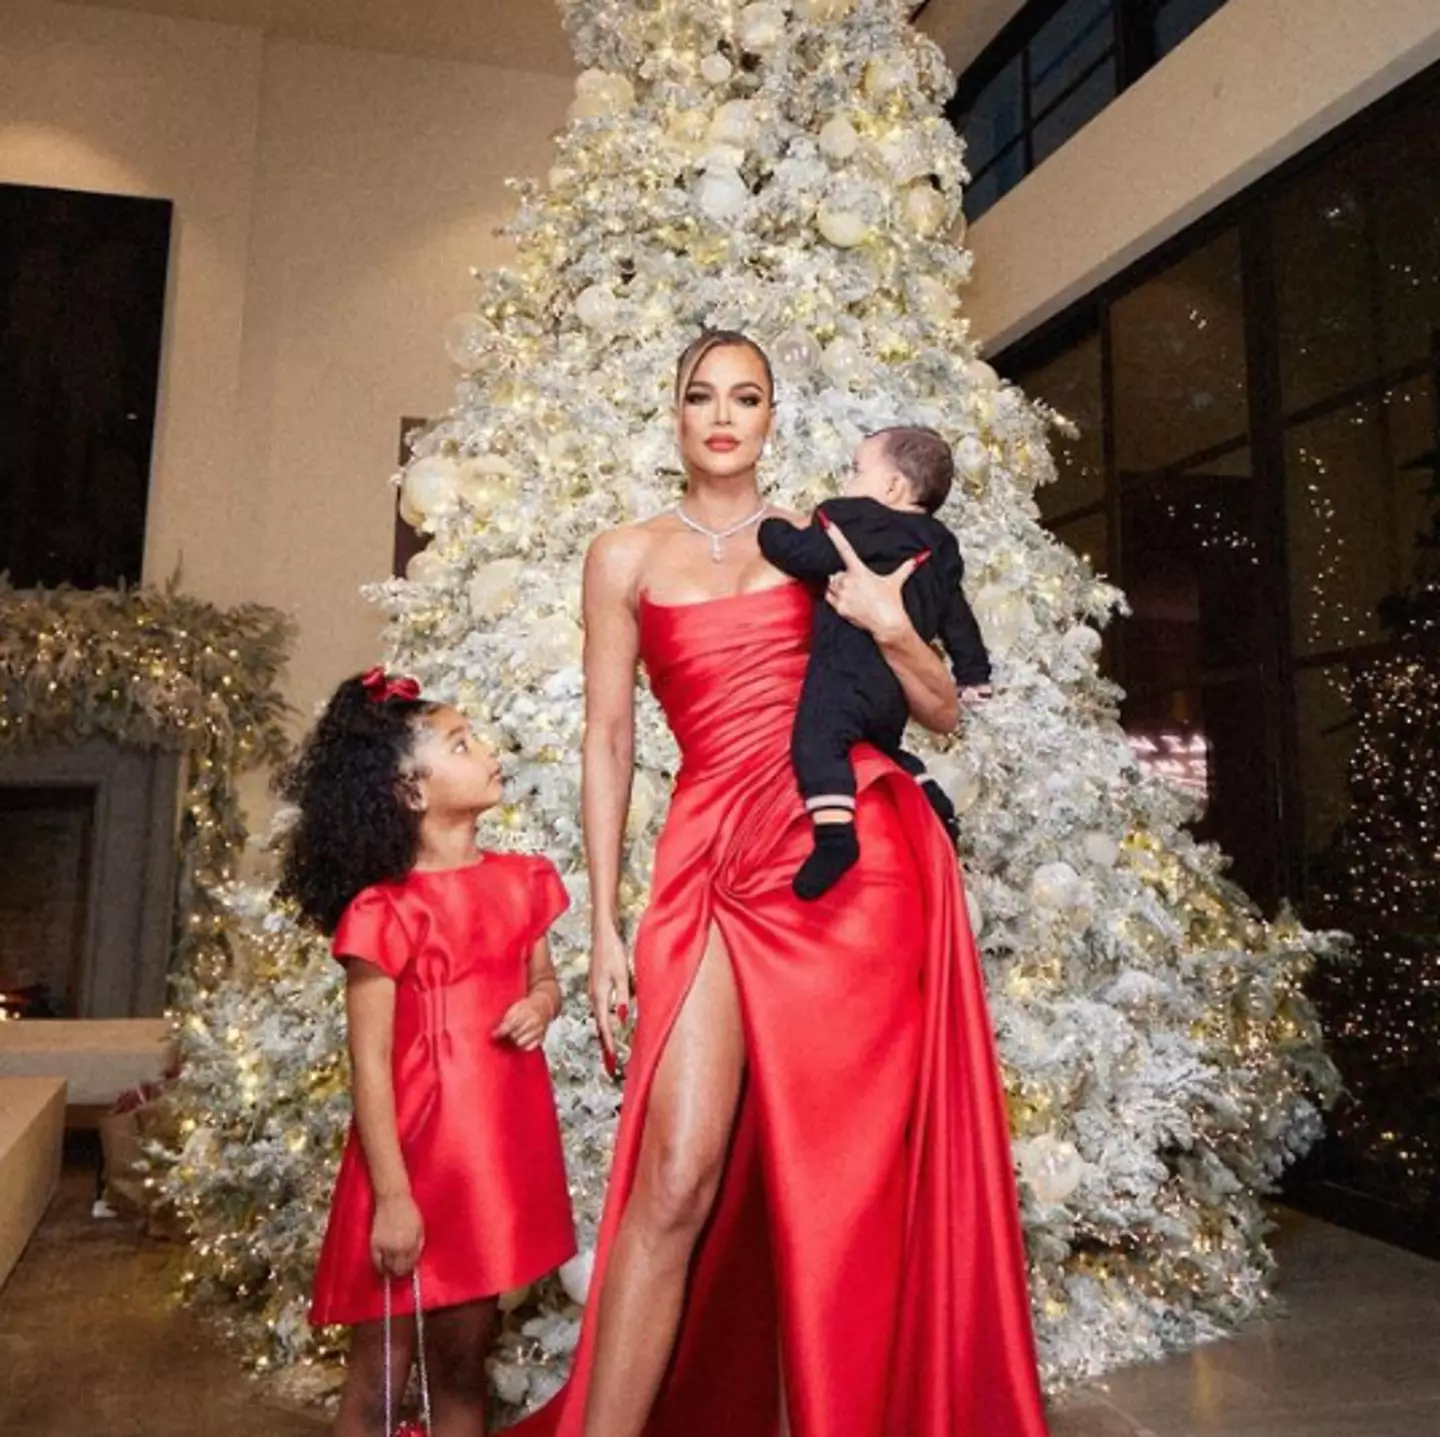 Khloe Kardashian shared a Christmas photo of her son.